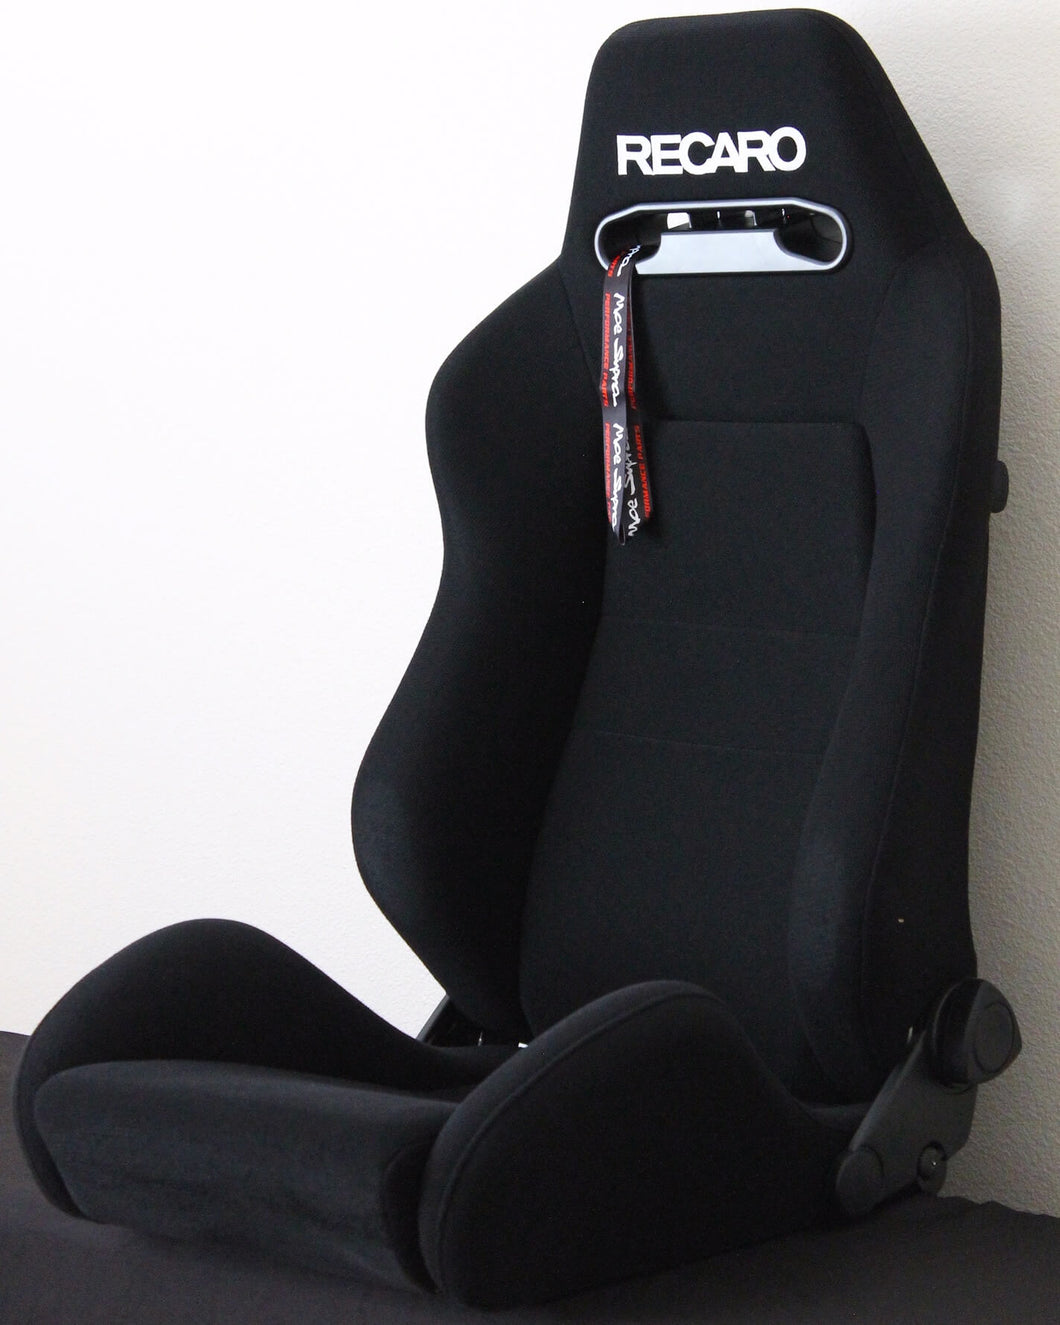 Recaro Speed Seat w/ Subhole - Black Avus Cloth, White Logo - Universal